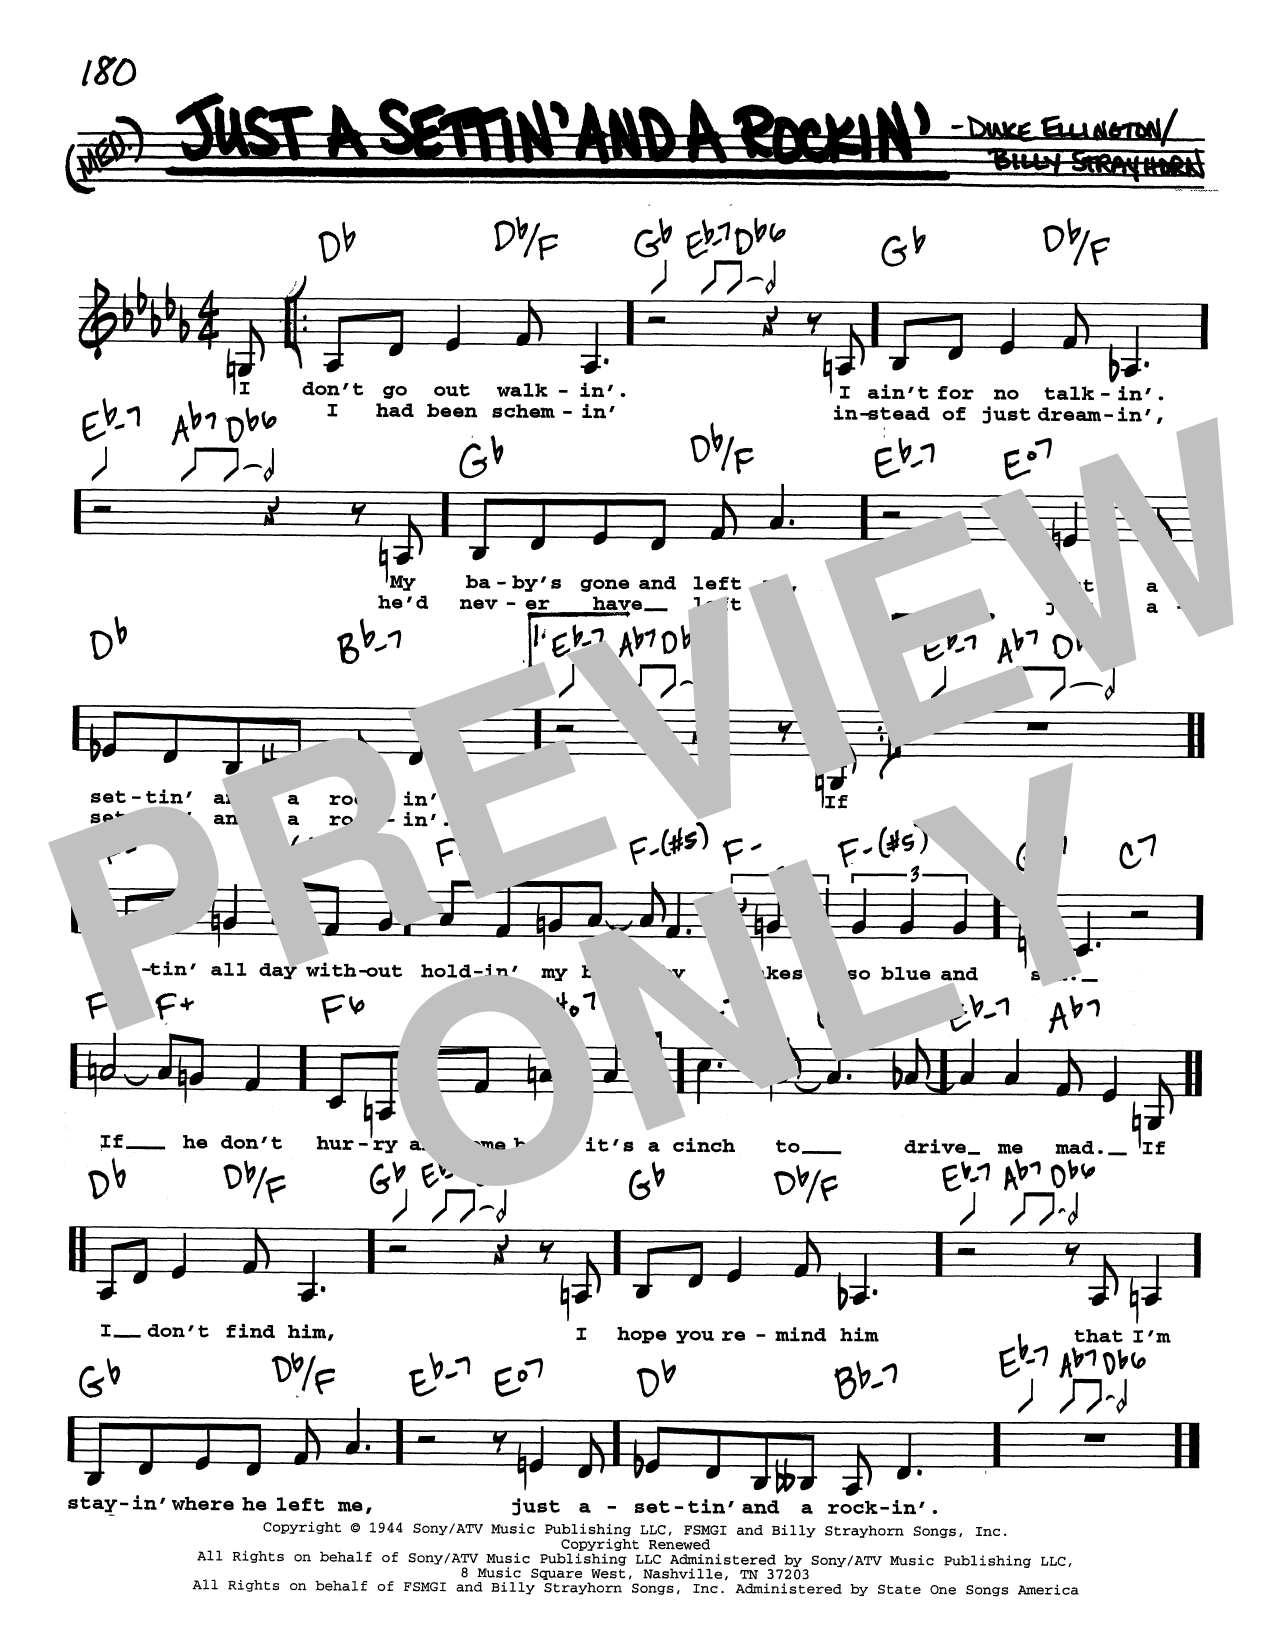 Duke Ellington Just A Settin' And A Rockin' (Low Voice) sheet music notes printable PDF score